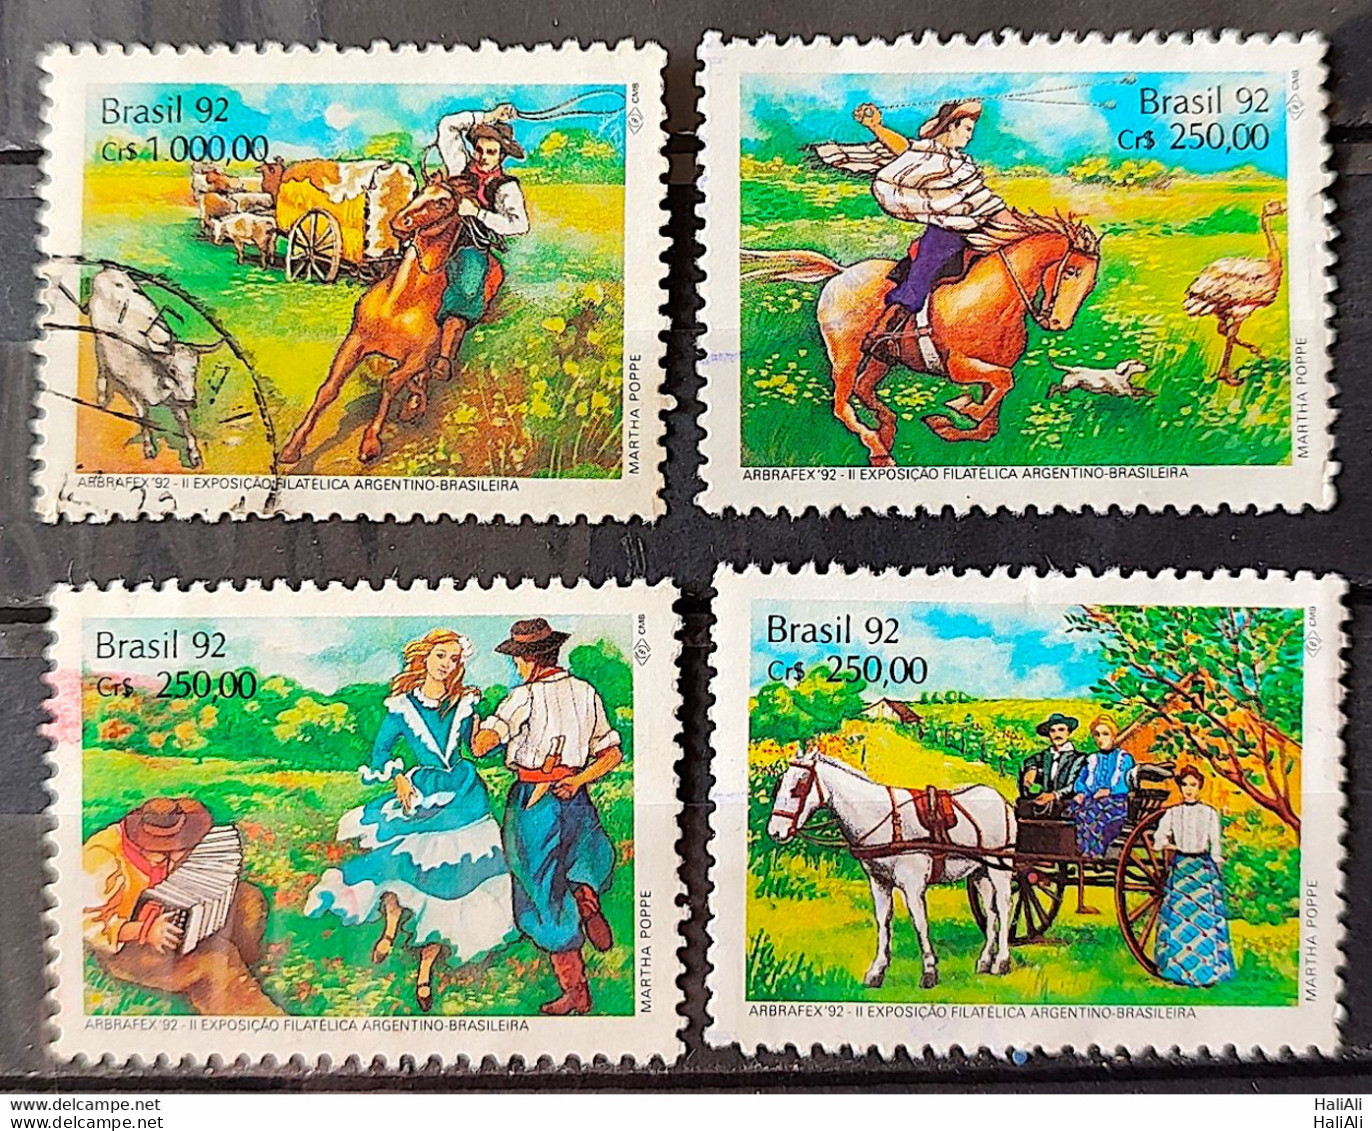 C 1778 Brazil Stamp Arbrafex Argentina Costumes Gauchos Music Gaita 1992 Complete Series Circulated 4 - Used Stamps